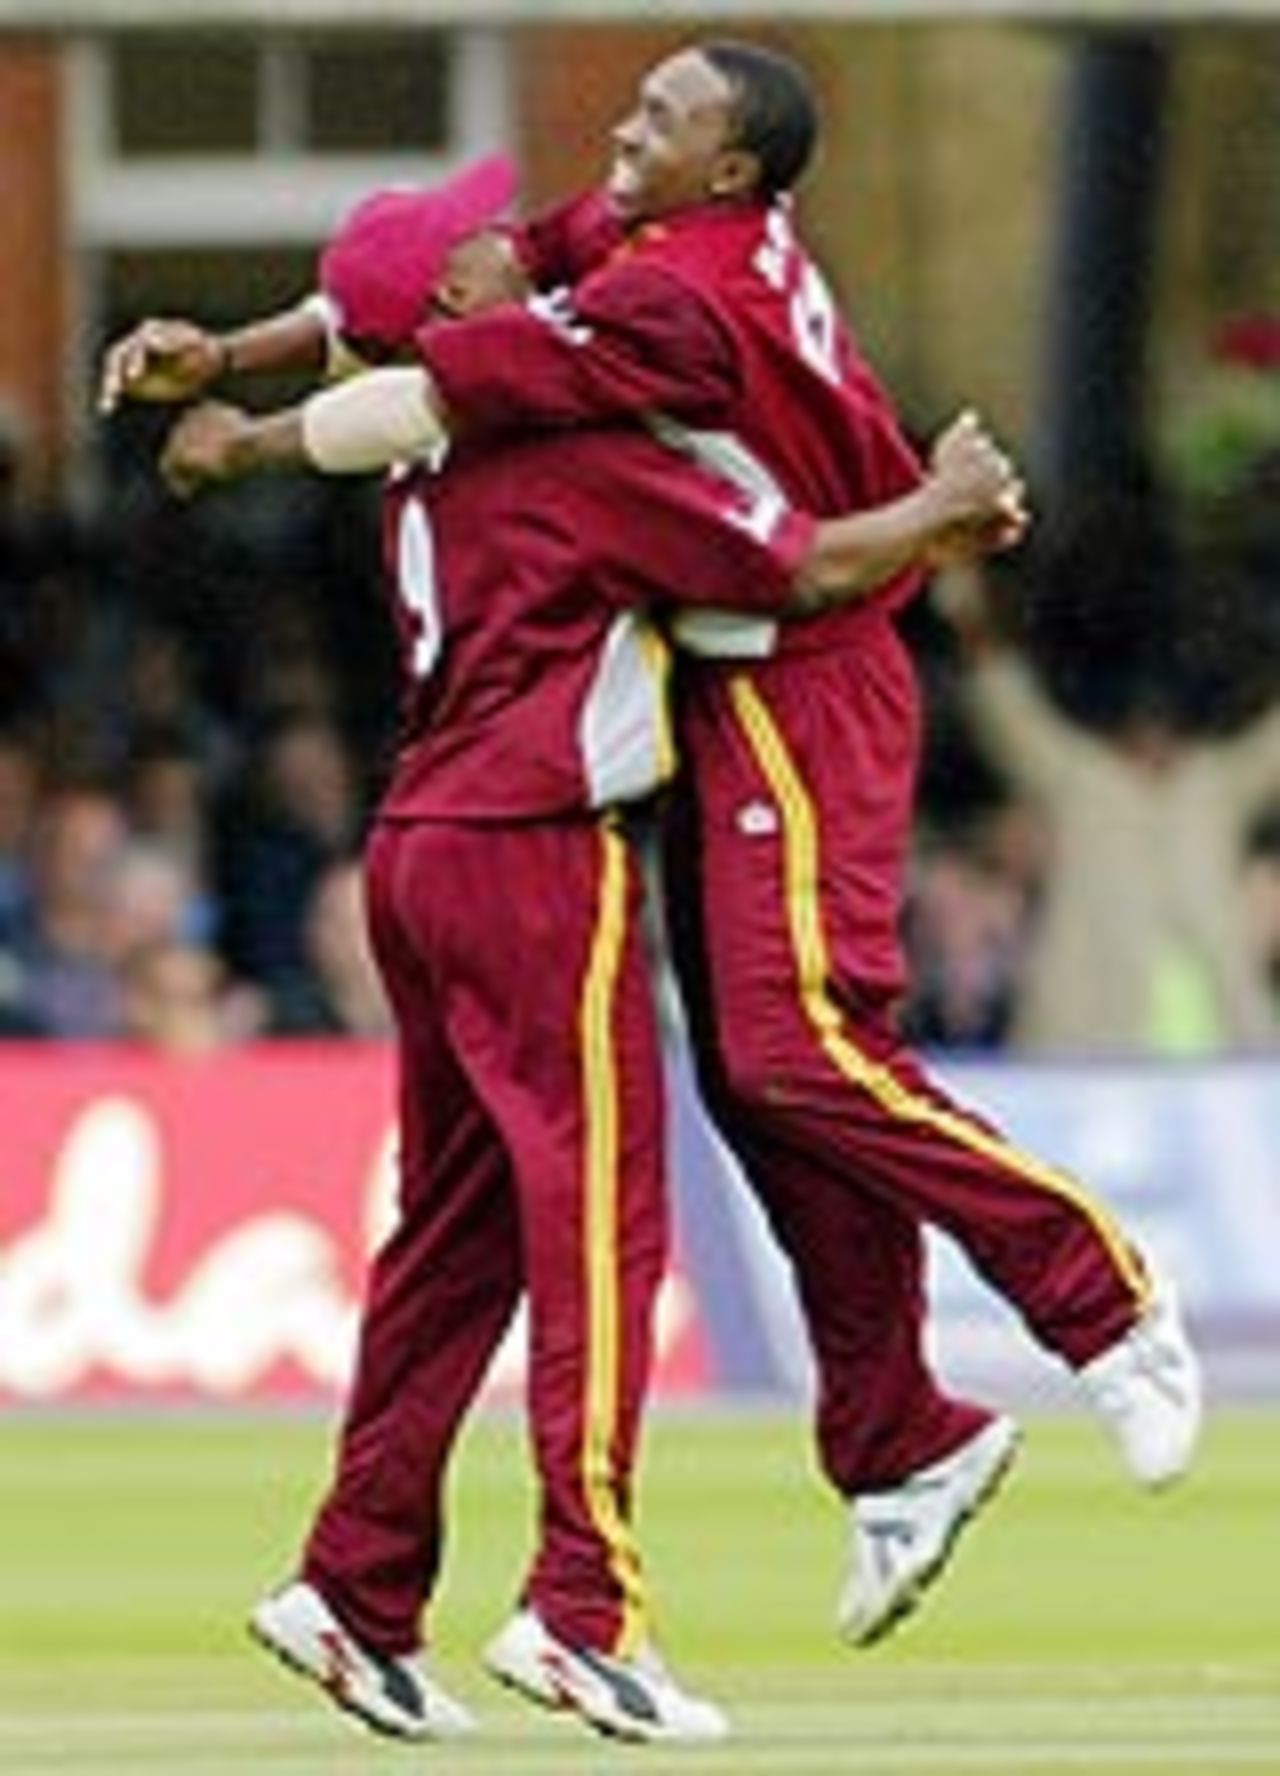 Dwayne Bravo celebrates a wicket